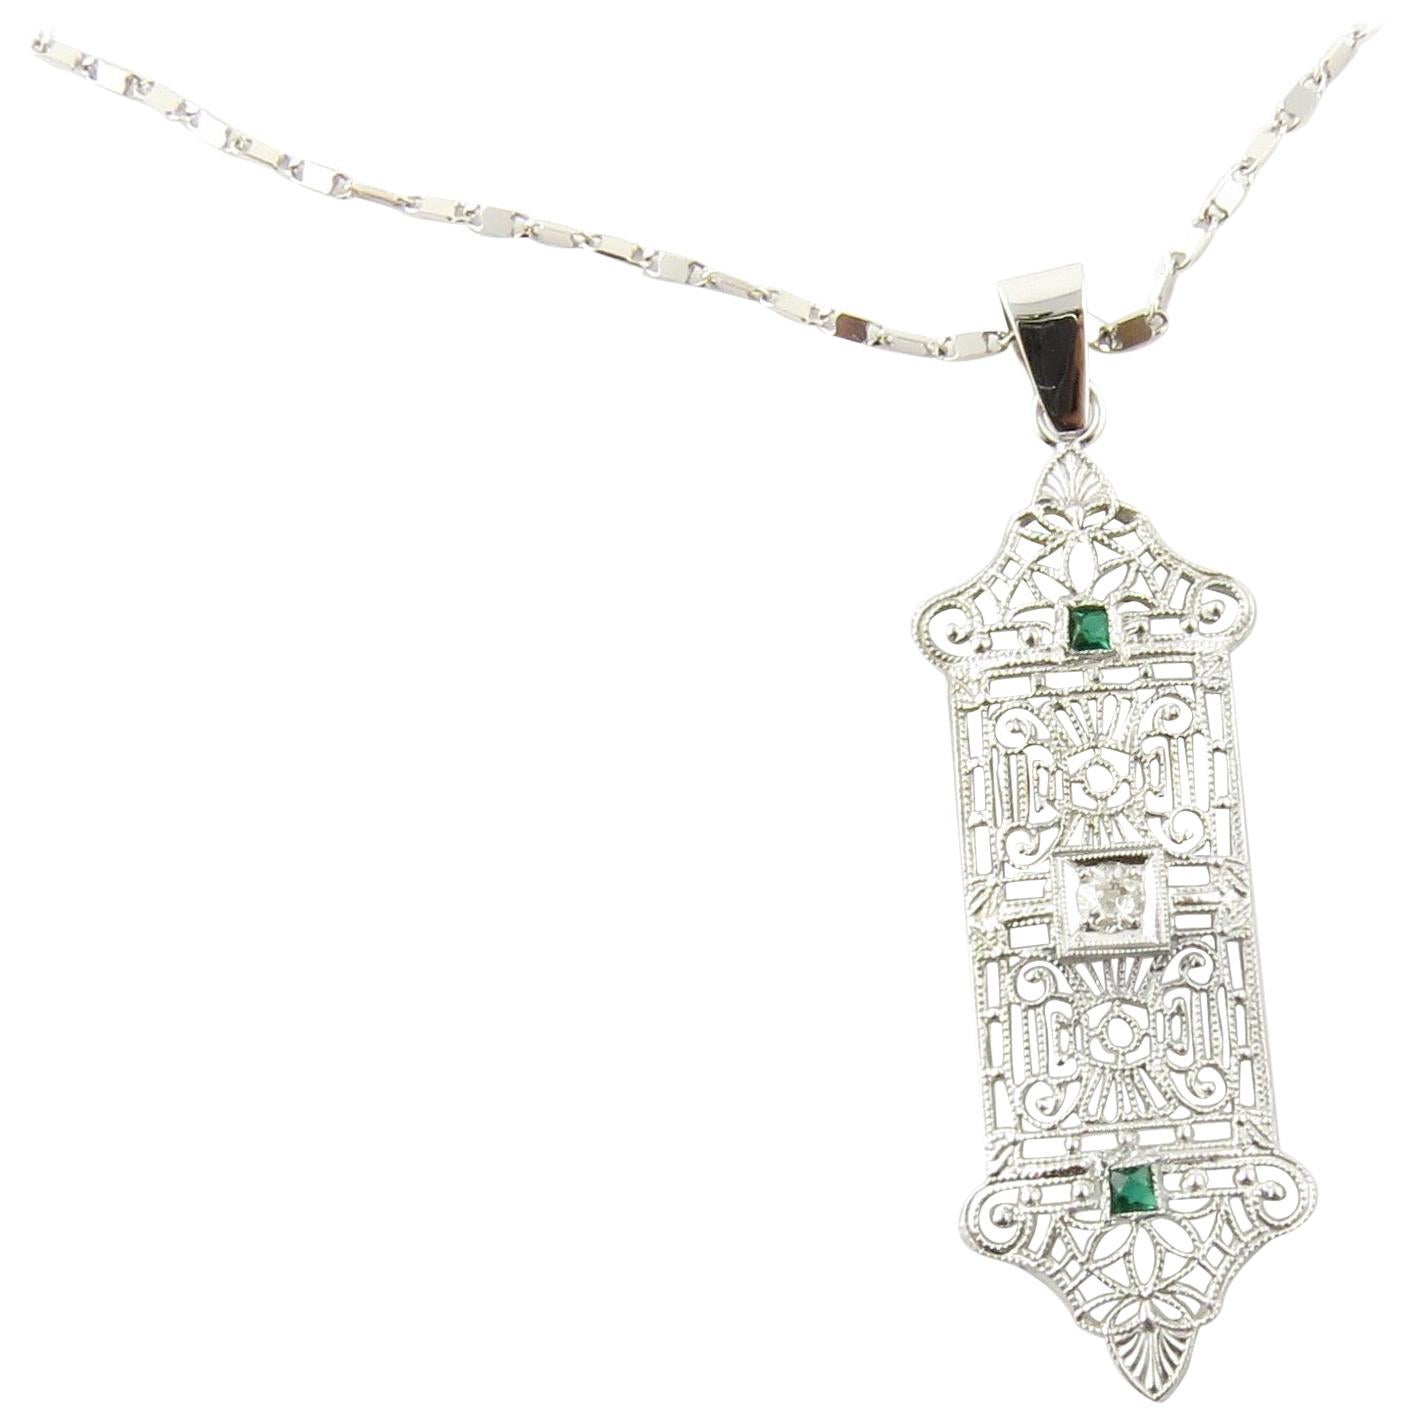 10 Karat White Gold Filigree, Diamond and Sapphire Pendant 14 Karat Necklace